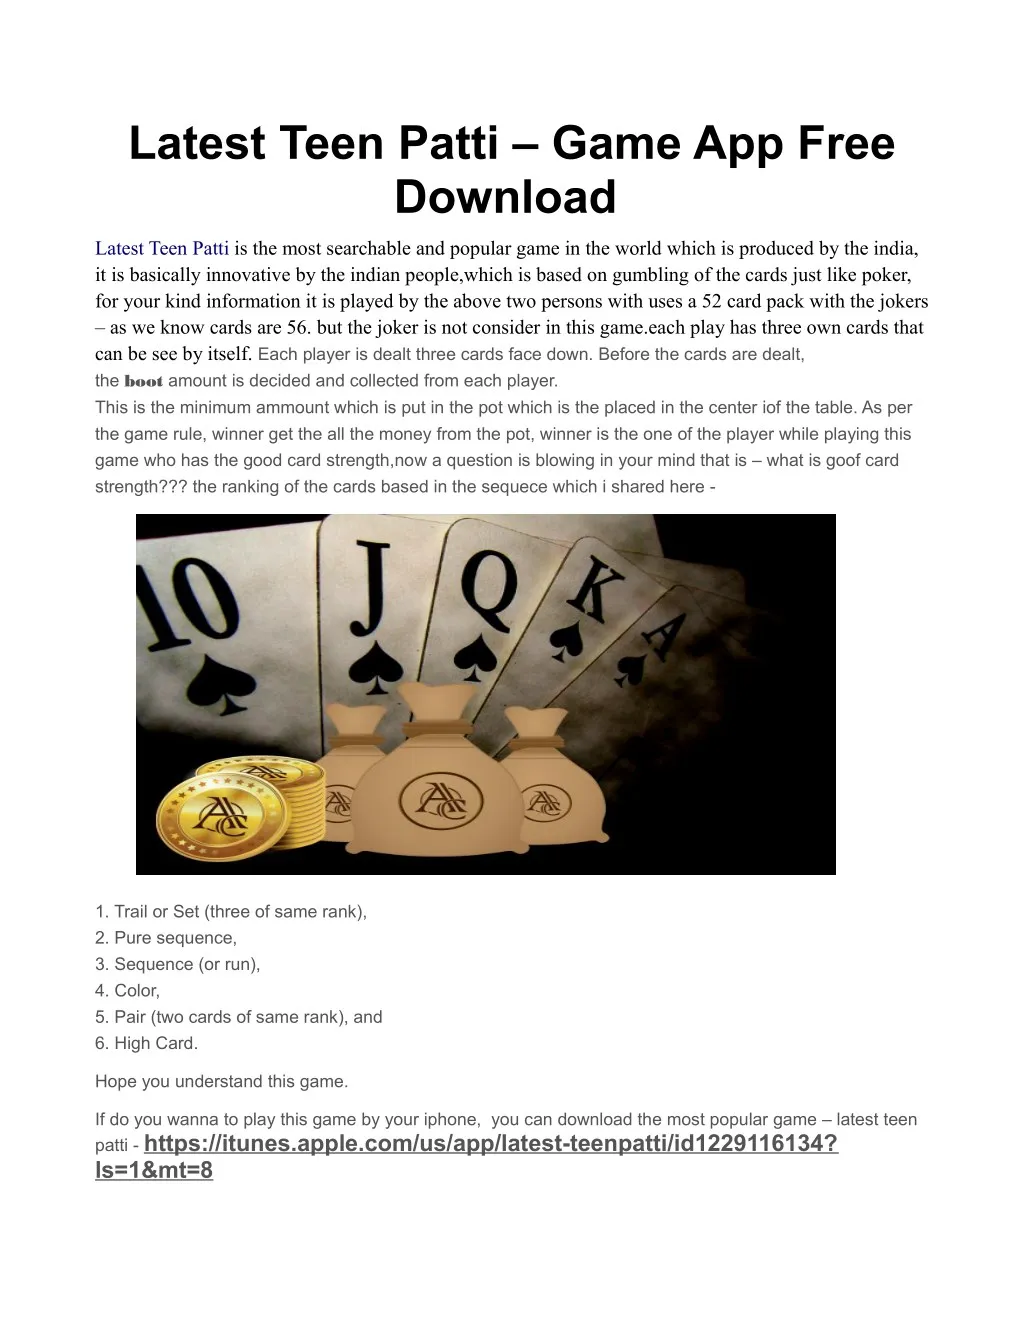 latest teen patti game app free download